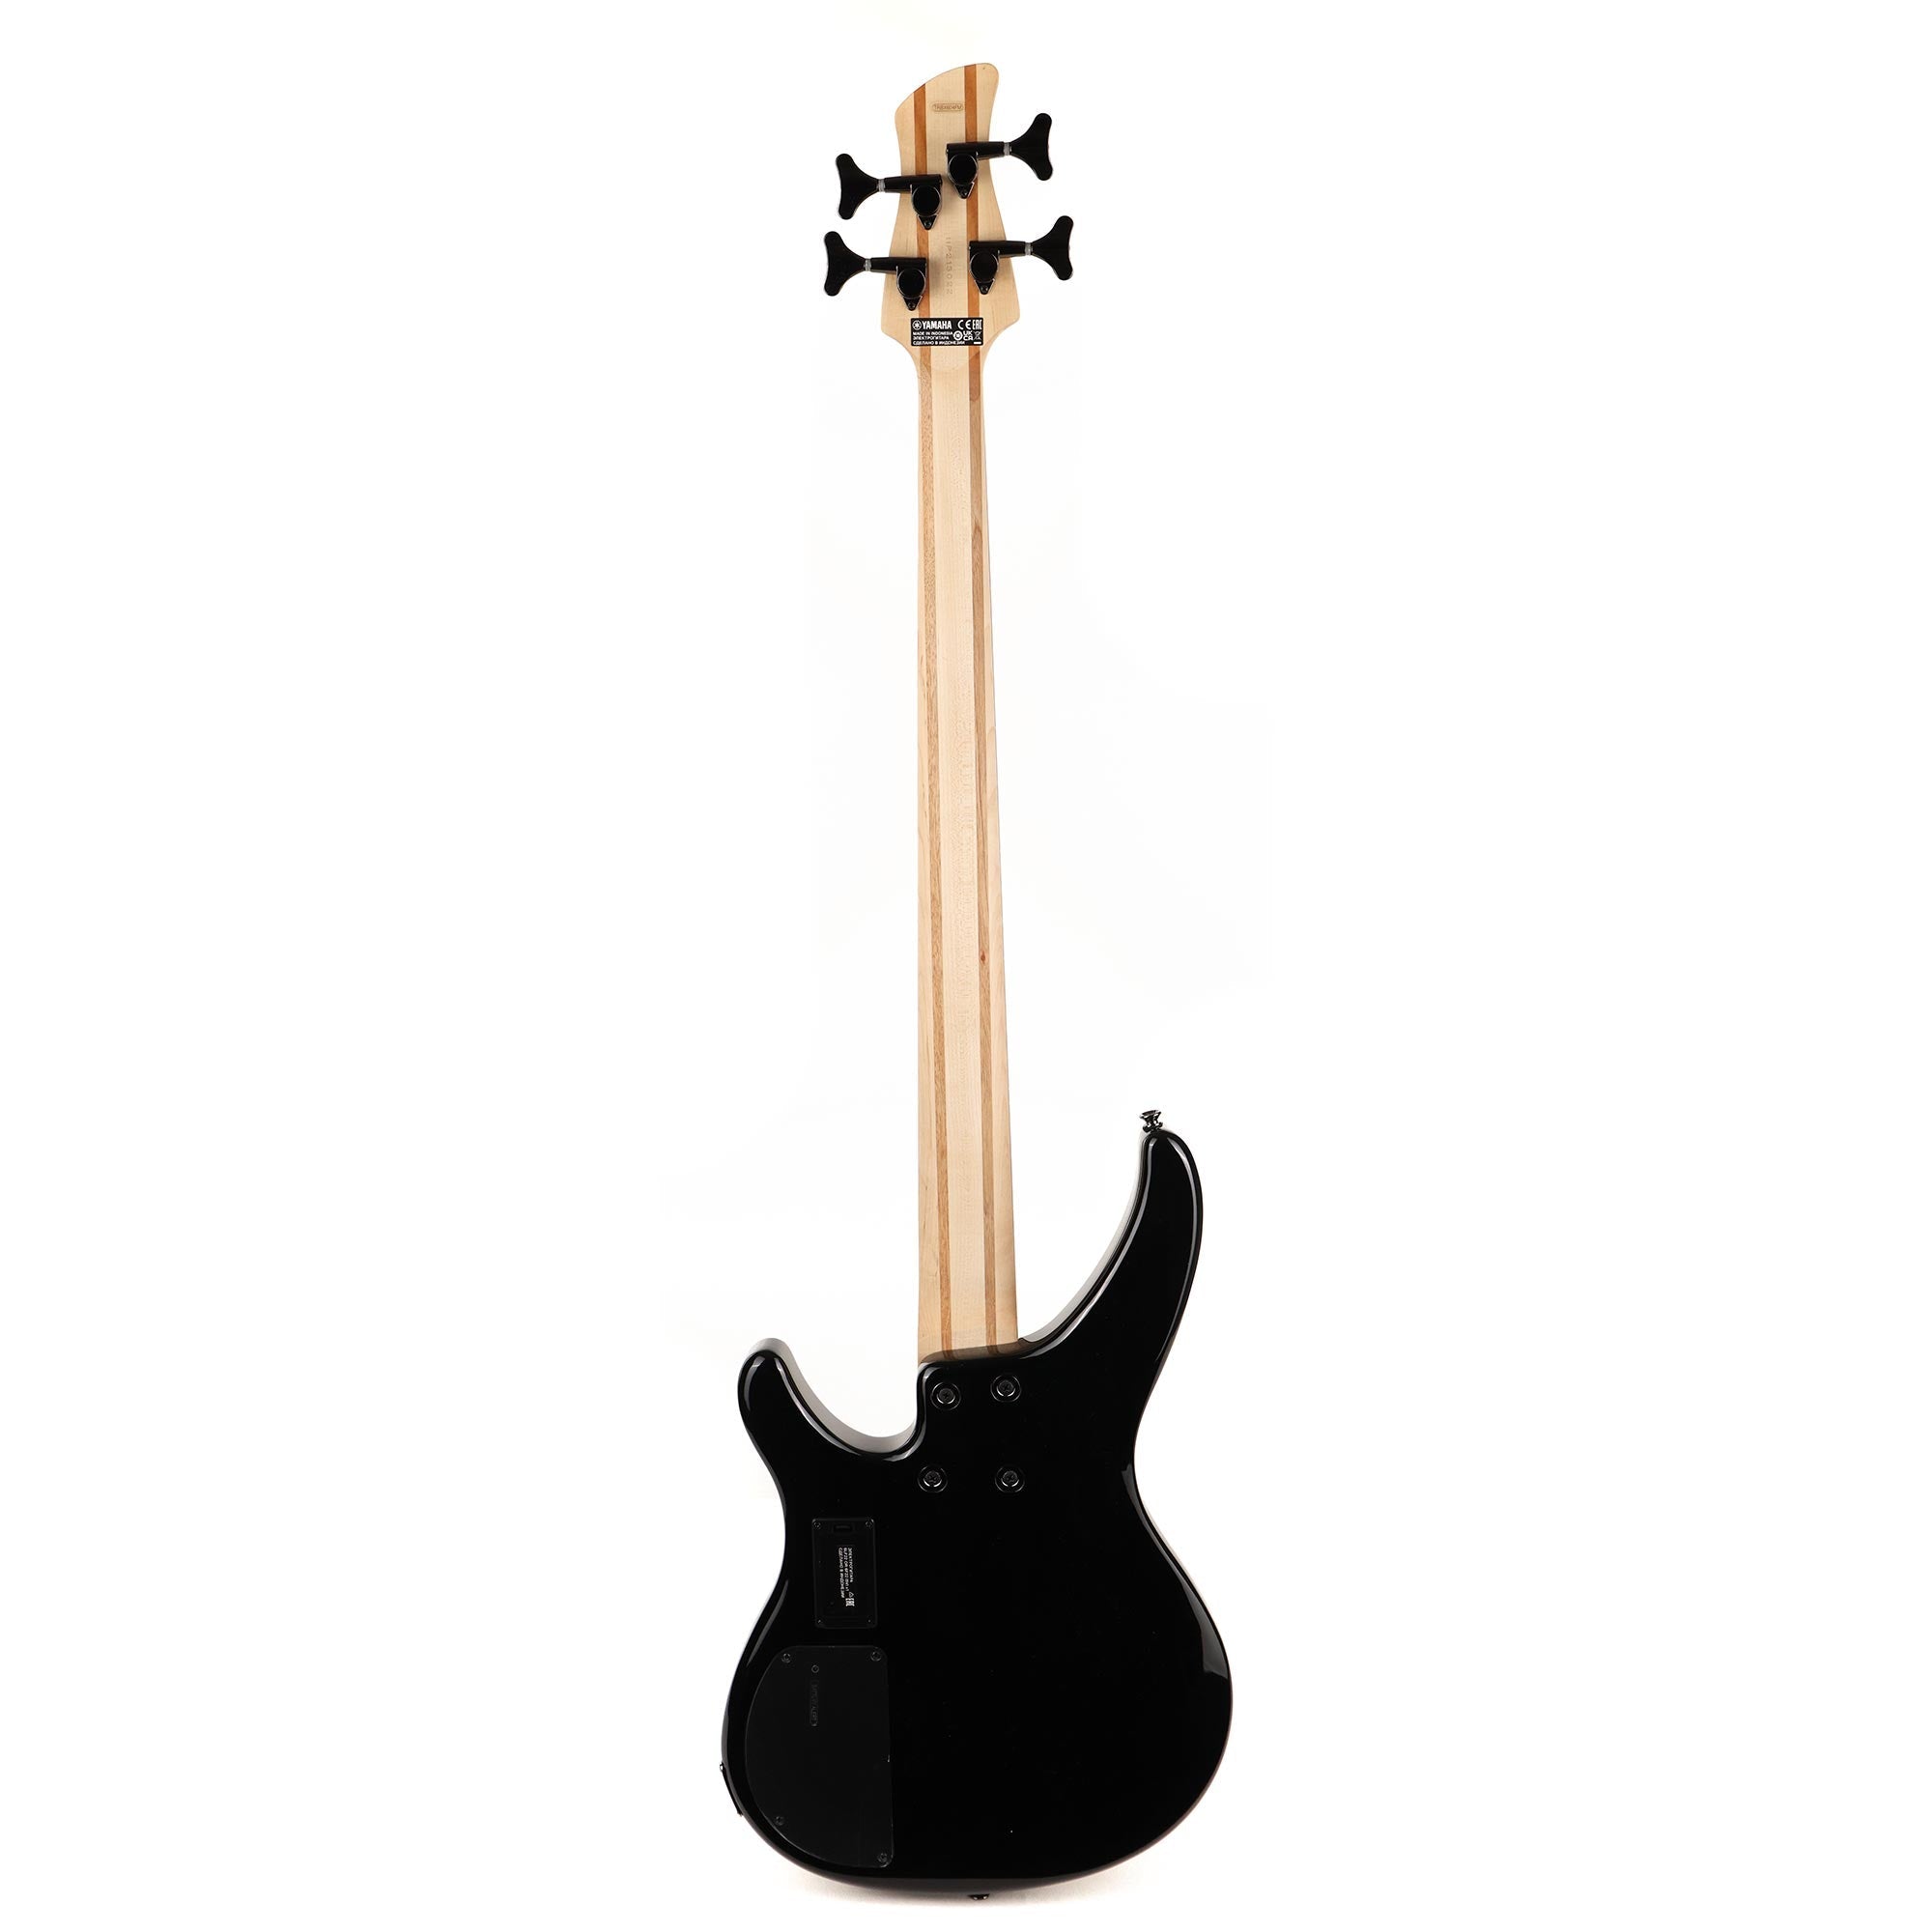 Yamaha TRBX604FM Electric Bass Guitar Transparent Black | The 